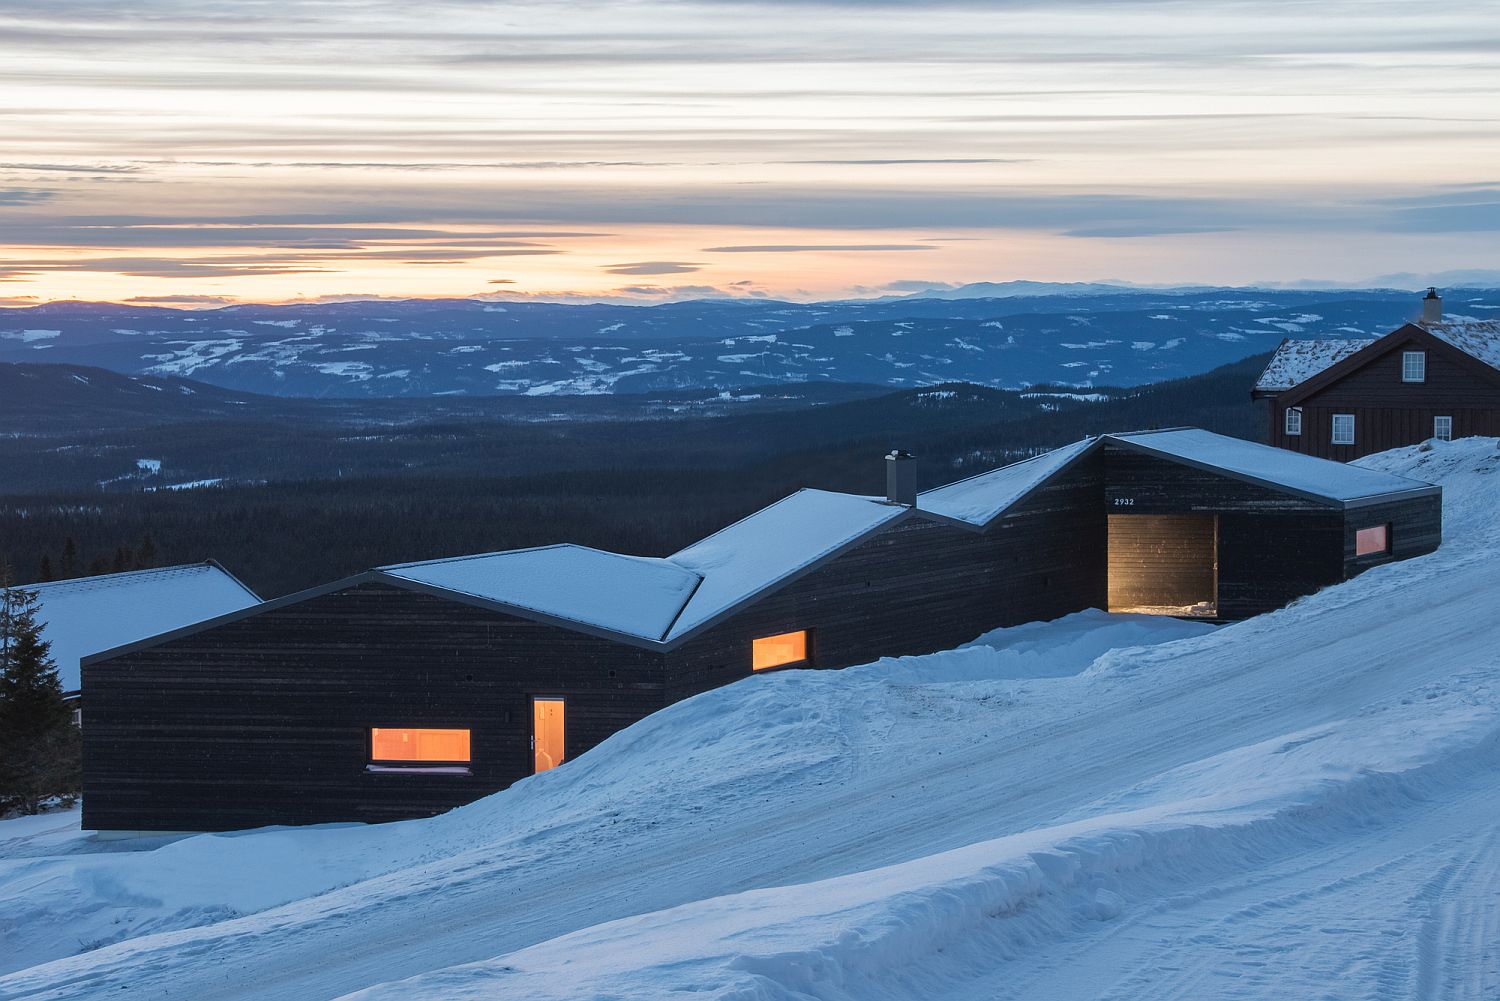 Modern minimalism meets Scandinavian simplicity at the Cabin